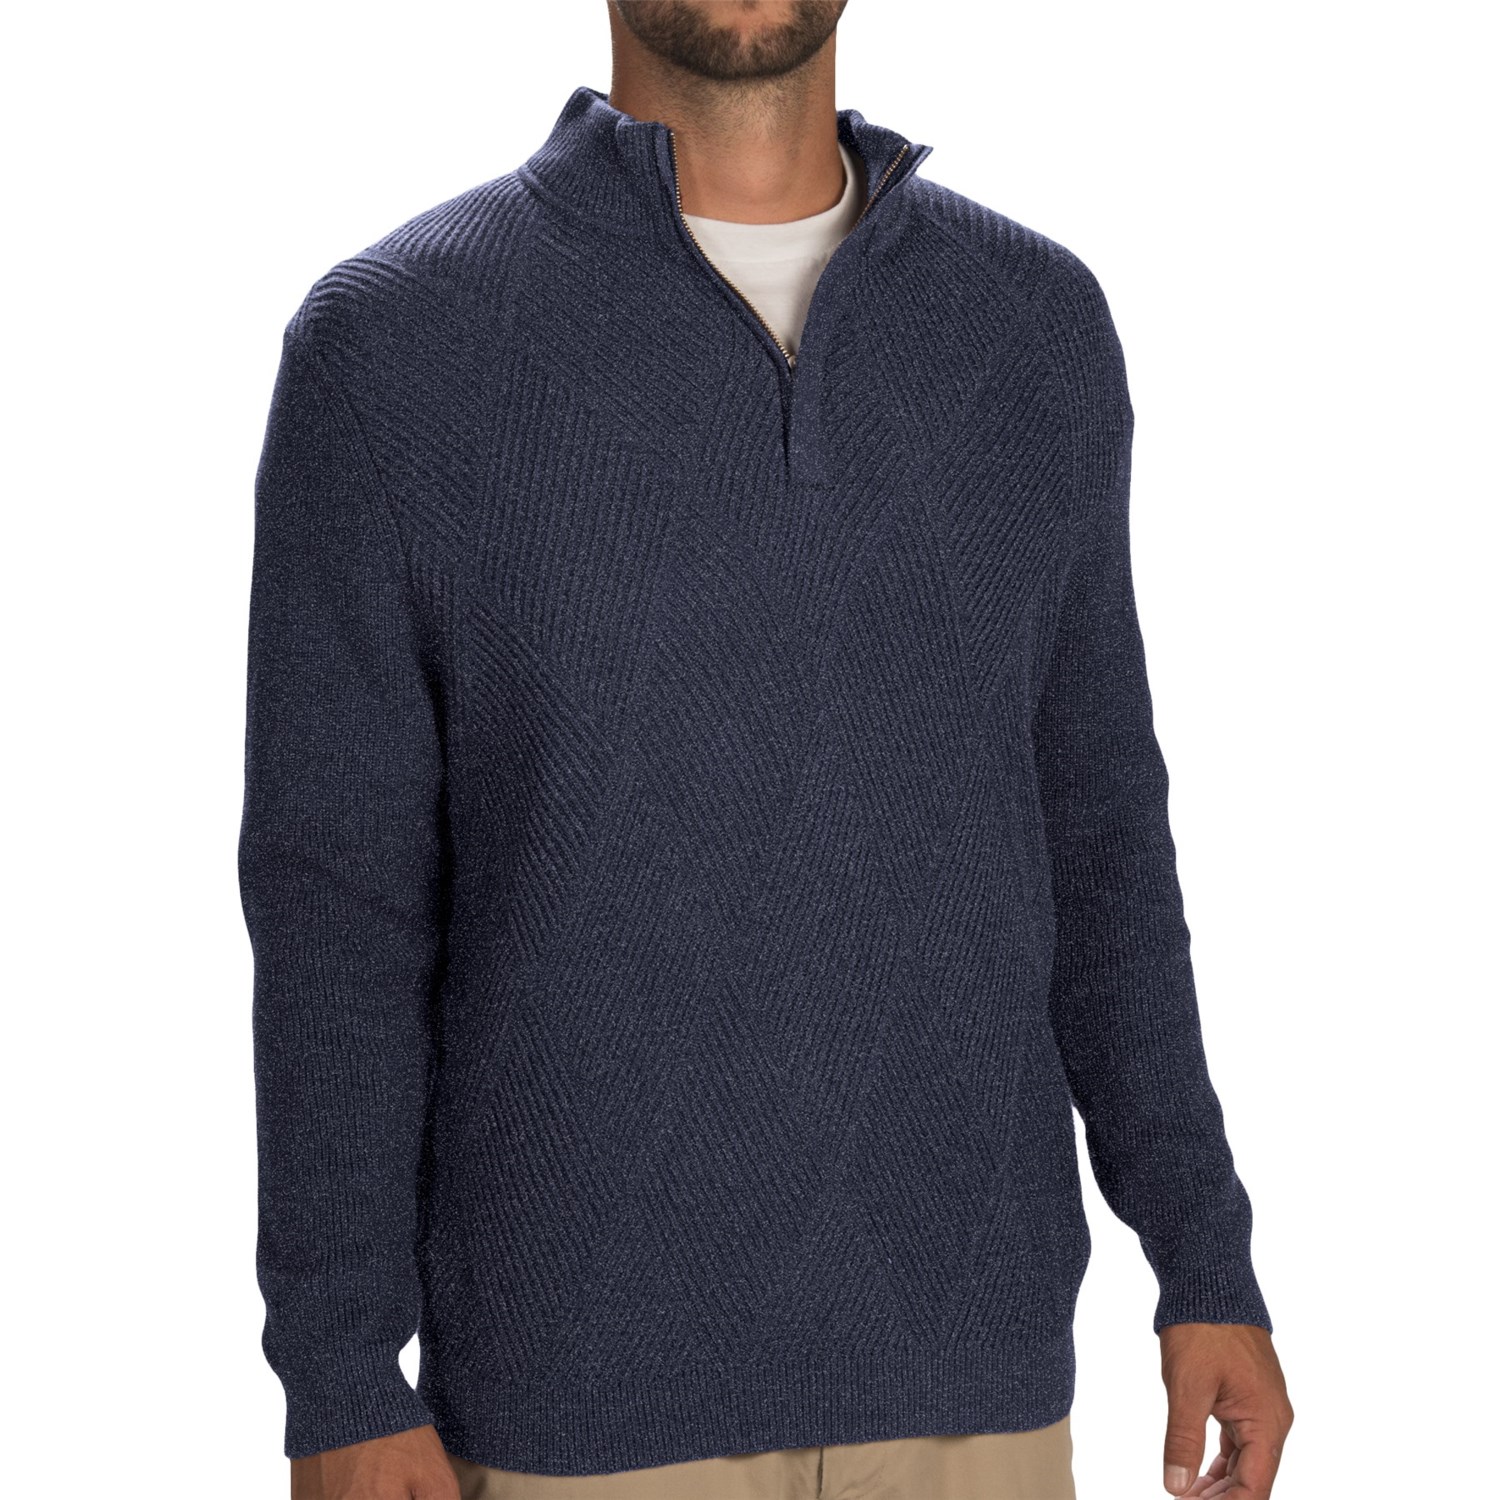 Tommy Bahama Marina Bay Sweater (For Men) 9439T - Save 71%